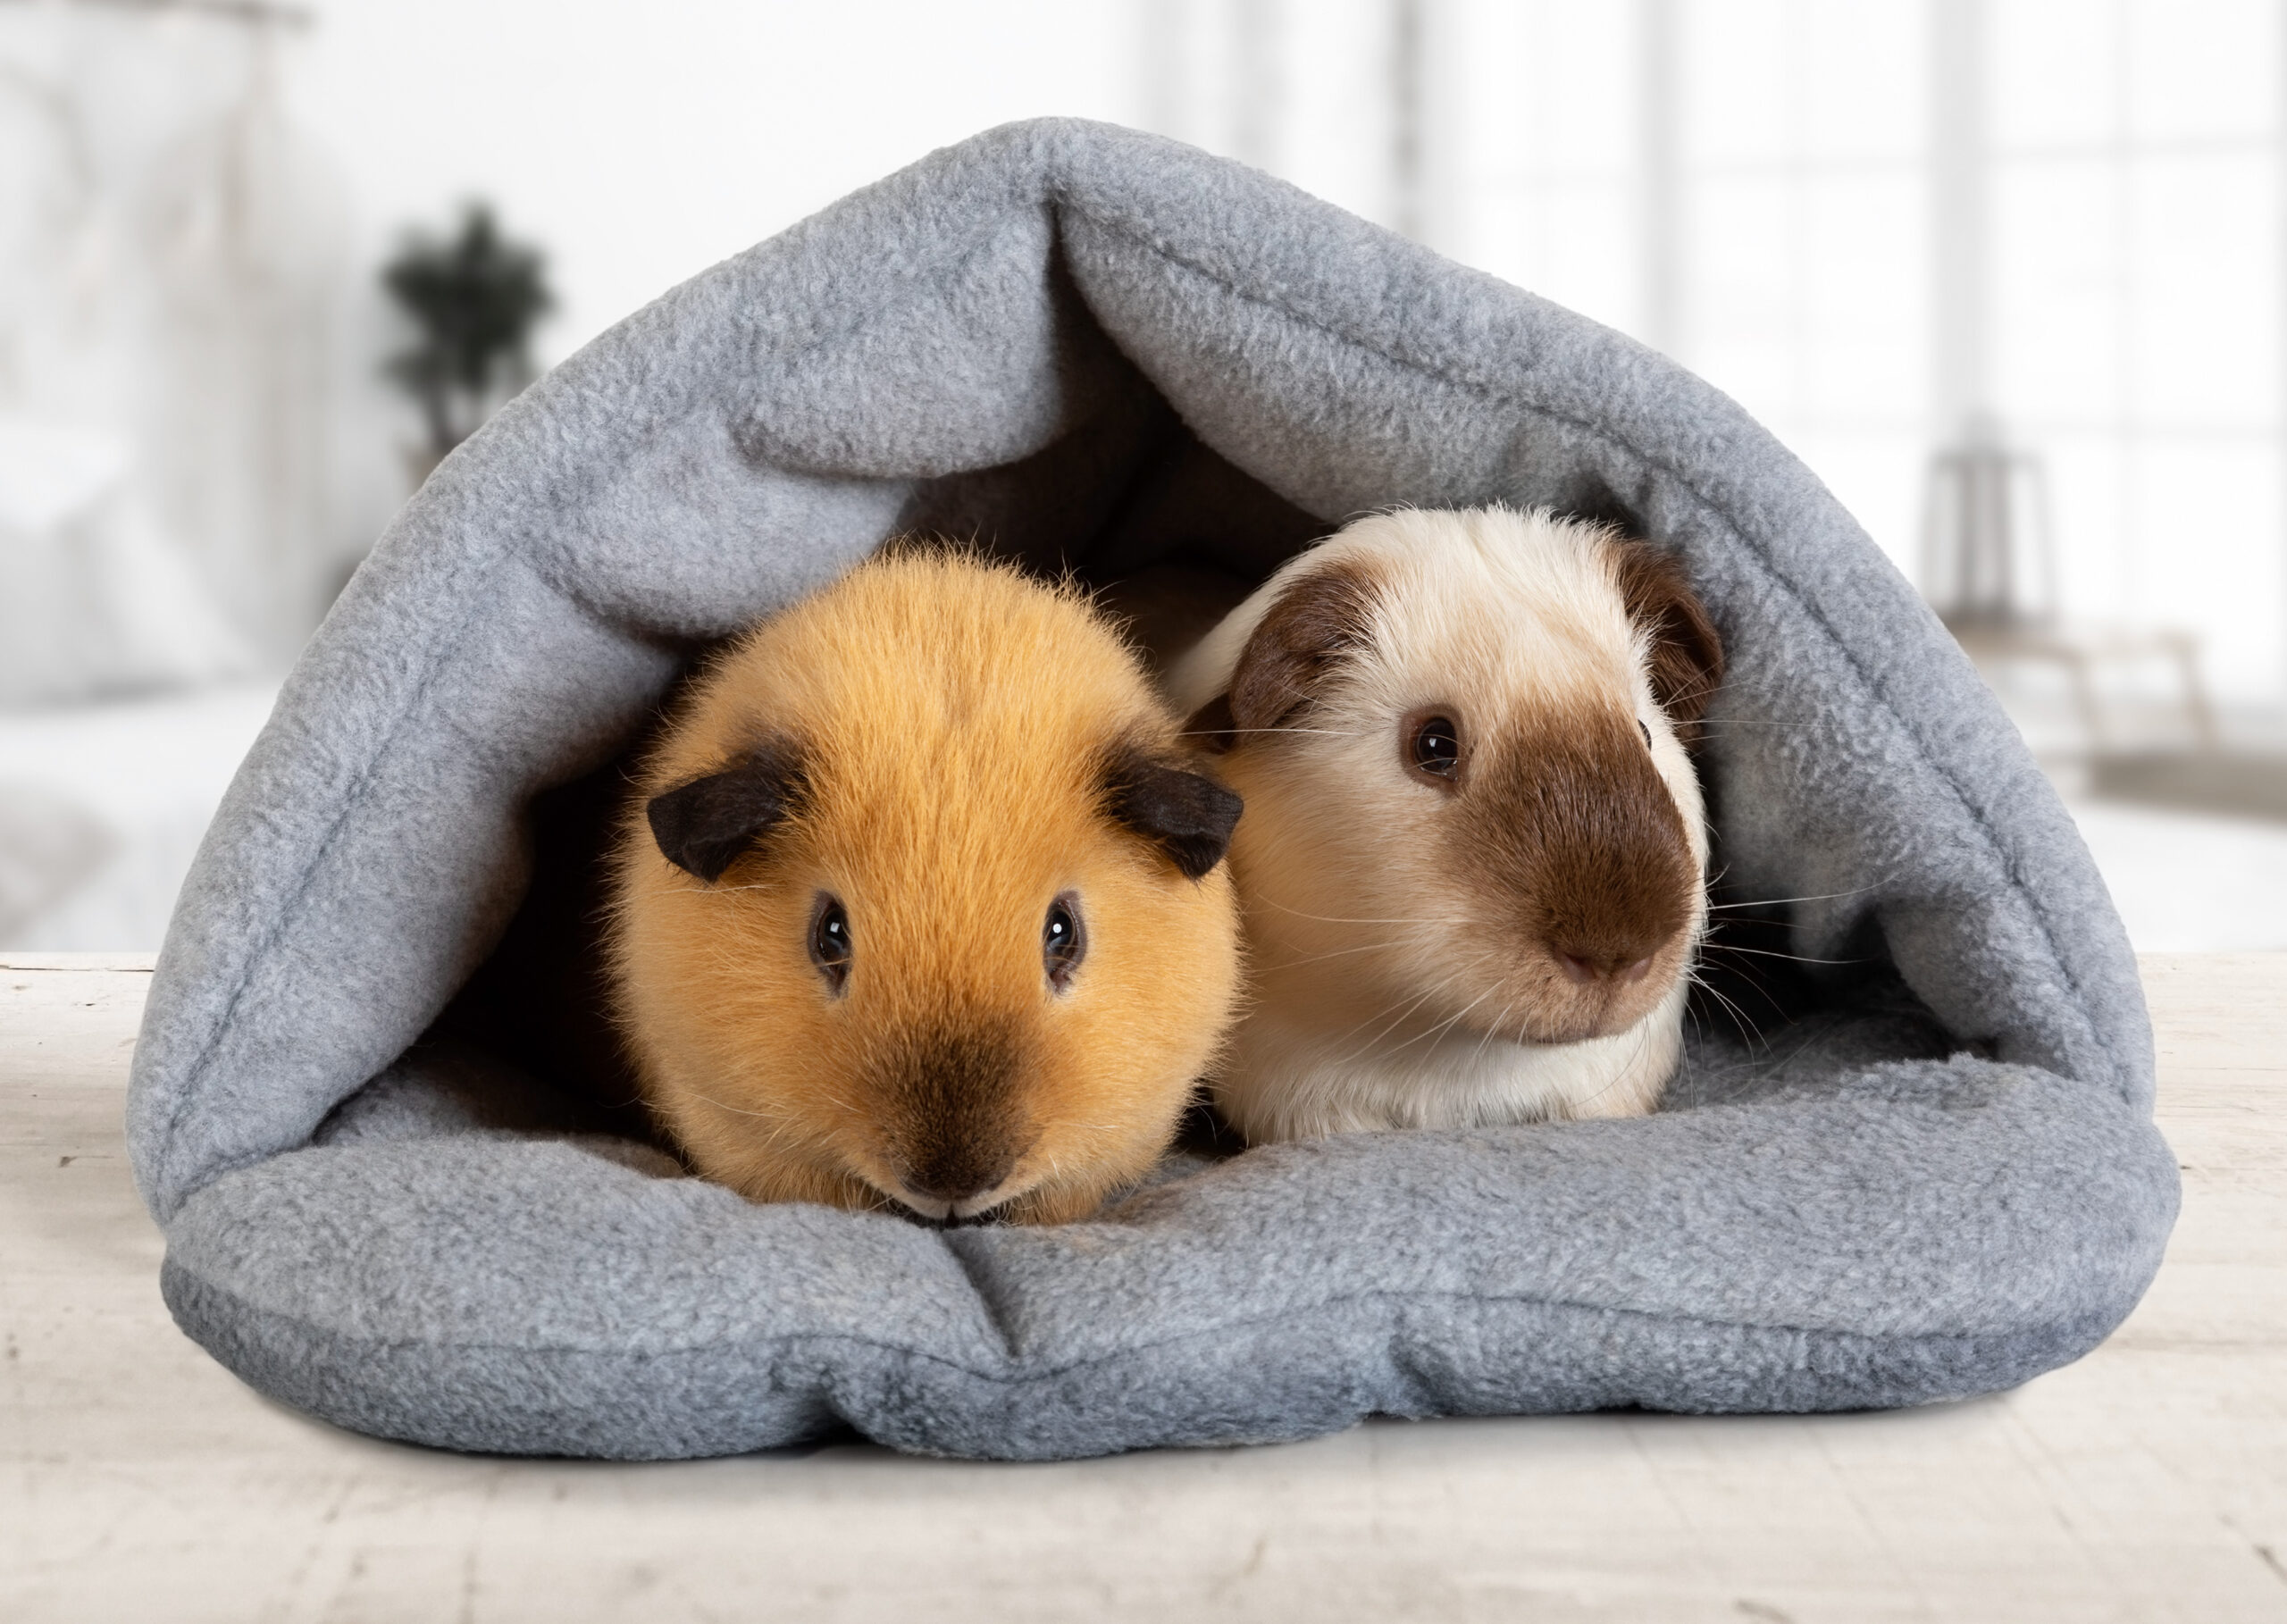 Two guinea pigs cuddling in a cozy hidey